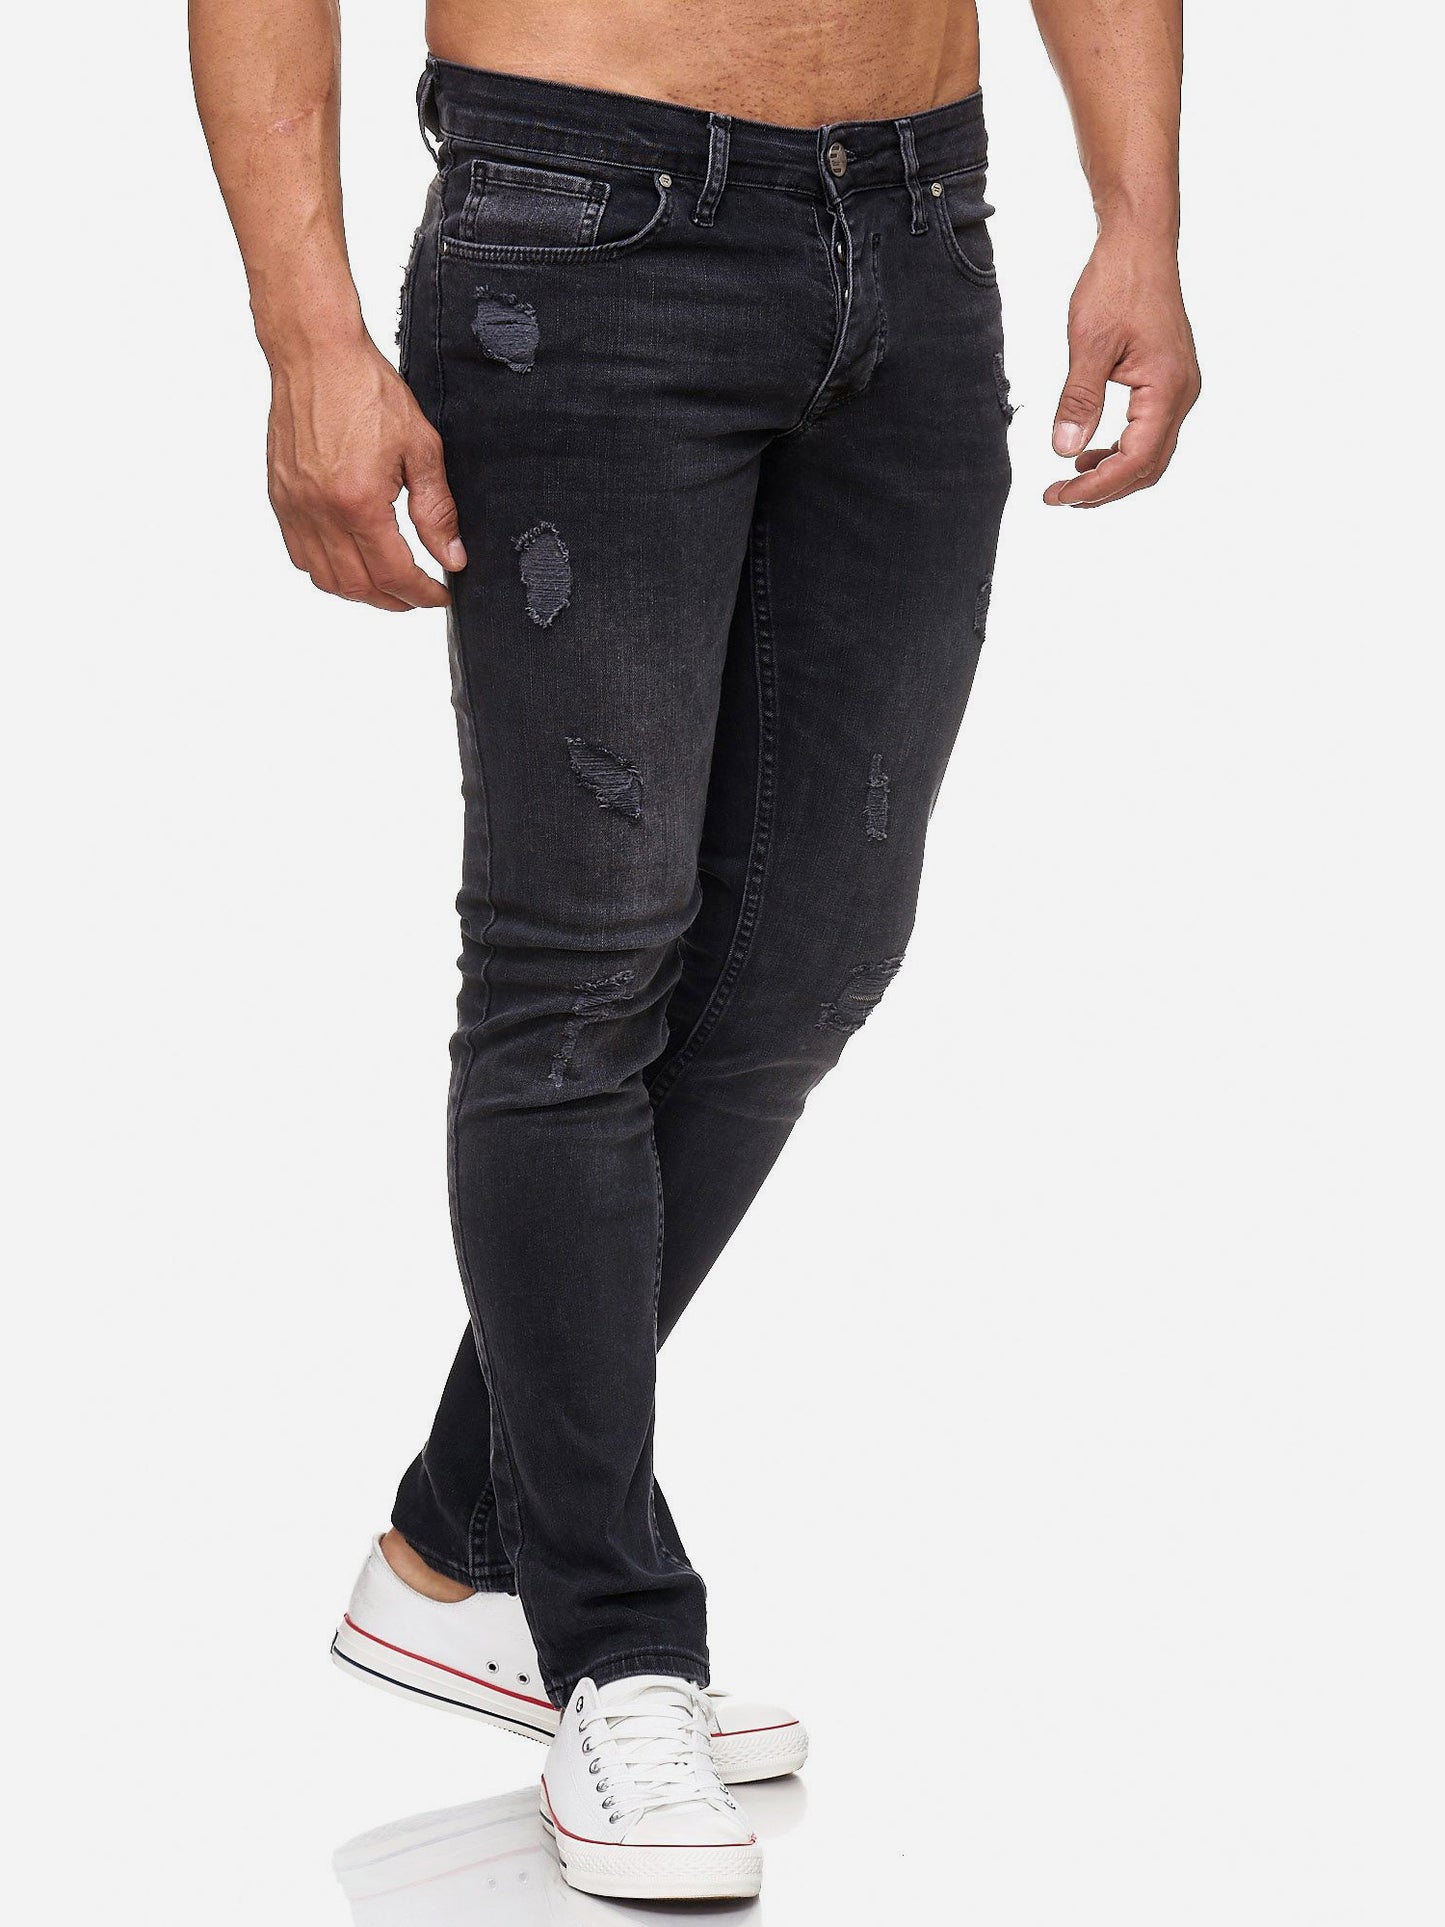 Tazzio Herren Jeans Slim Fit im Destroyed Look 17502